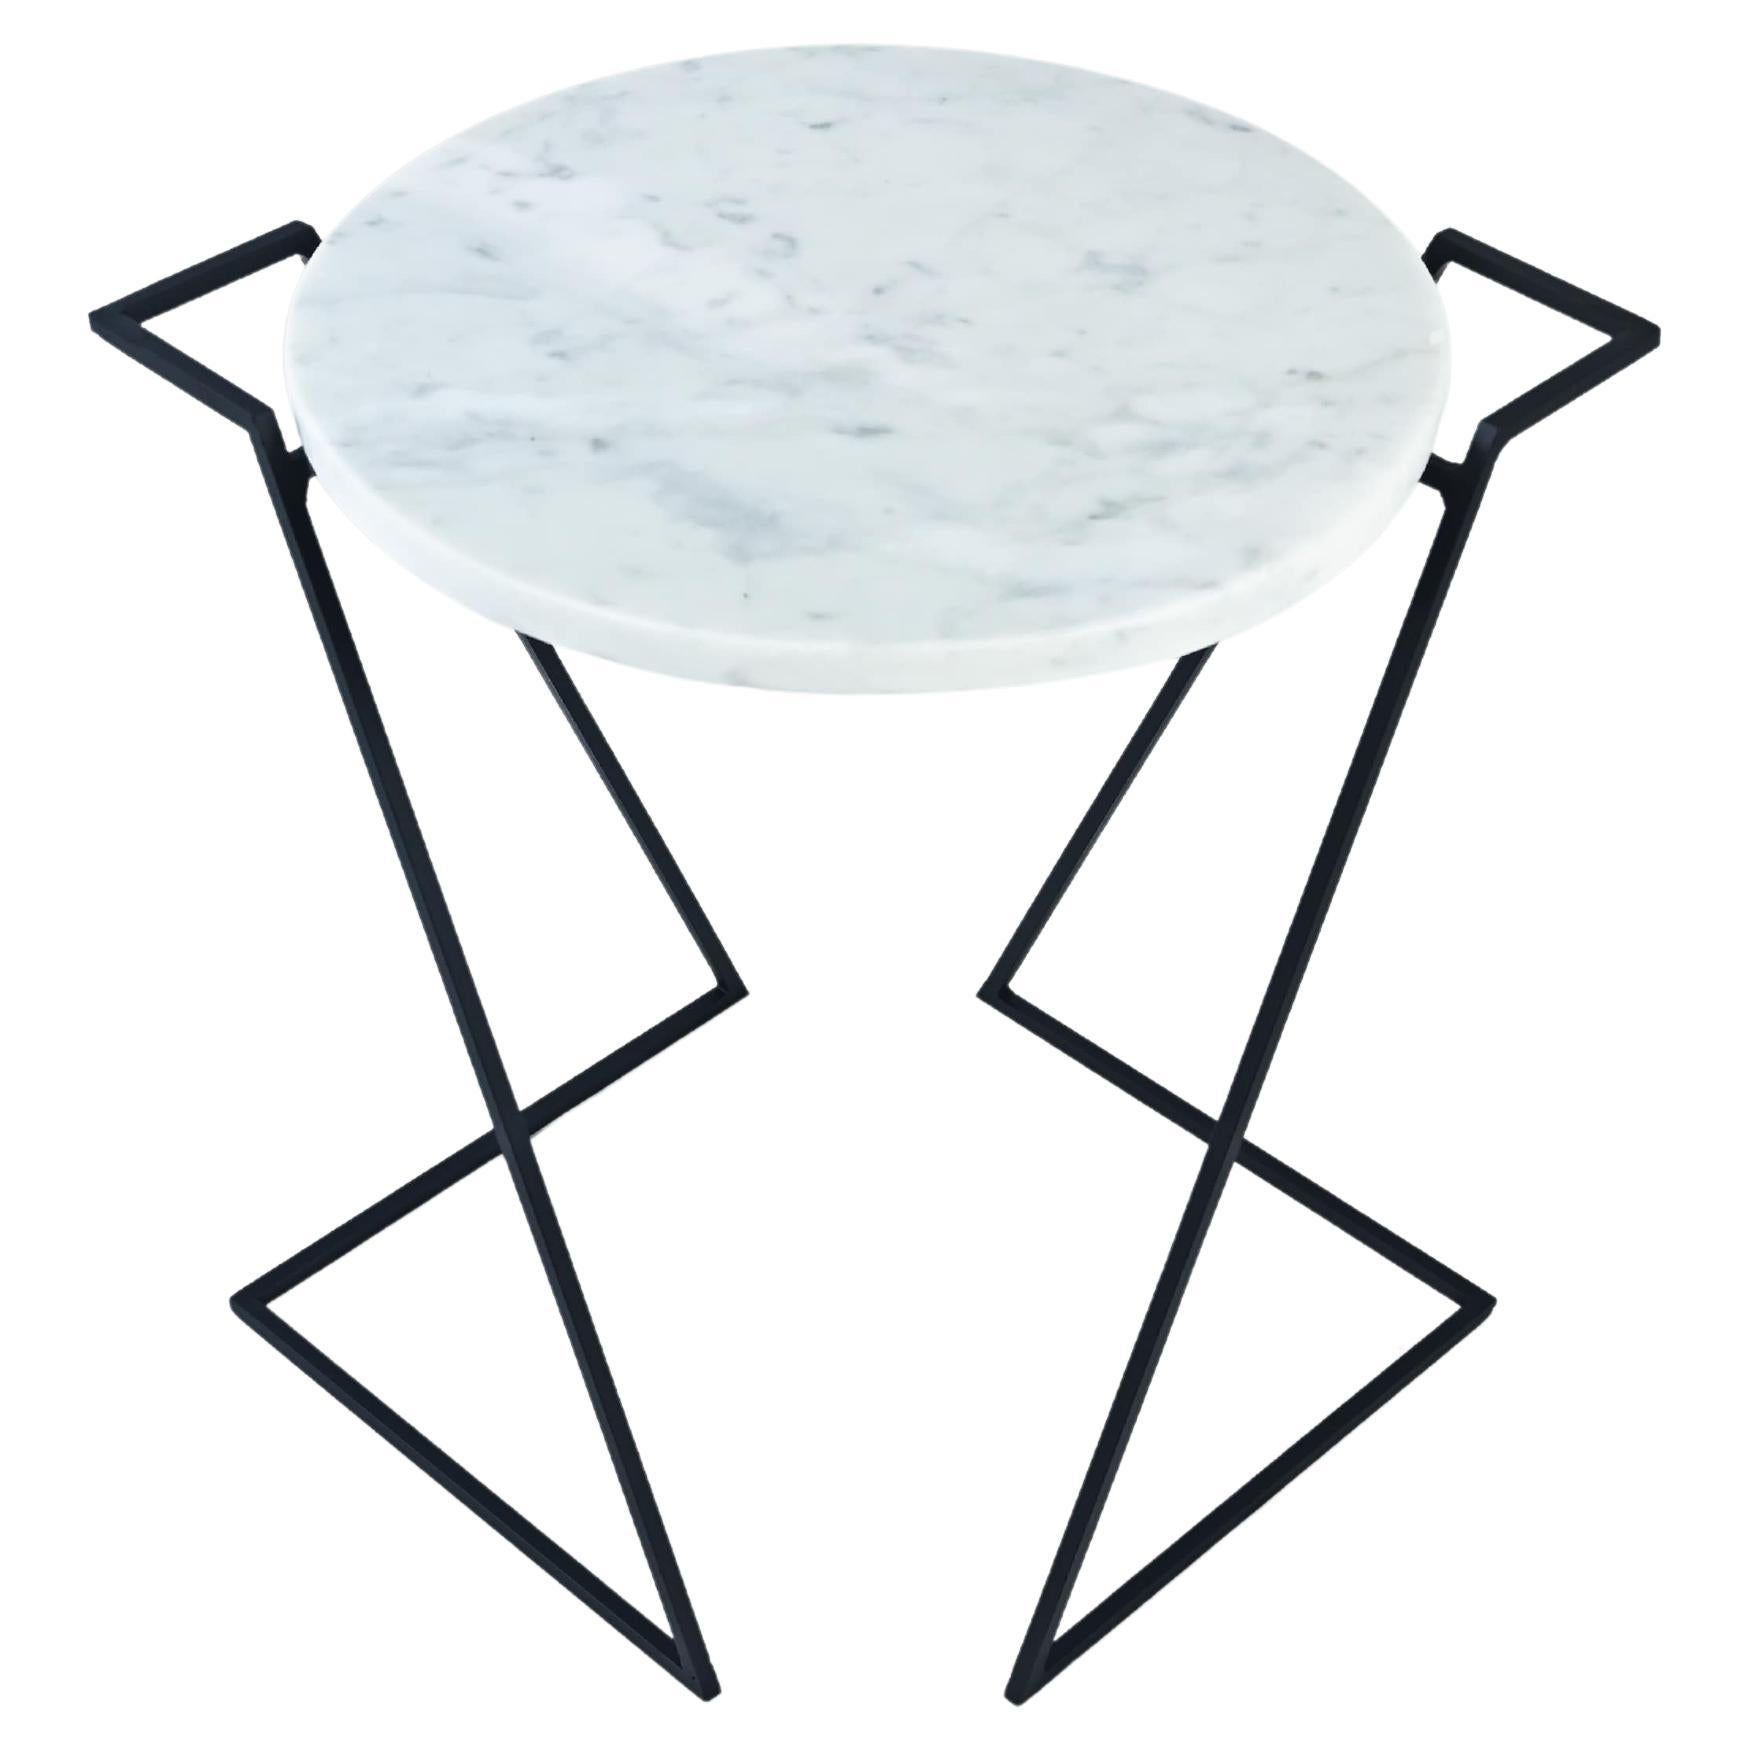 Table d'appoint Saturno en marbre de Carrare par DFdesignlab, fabrique  la main en Italie